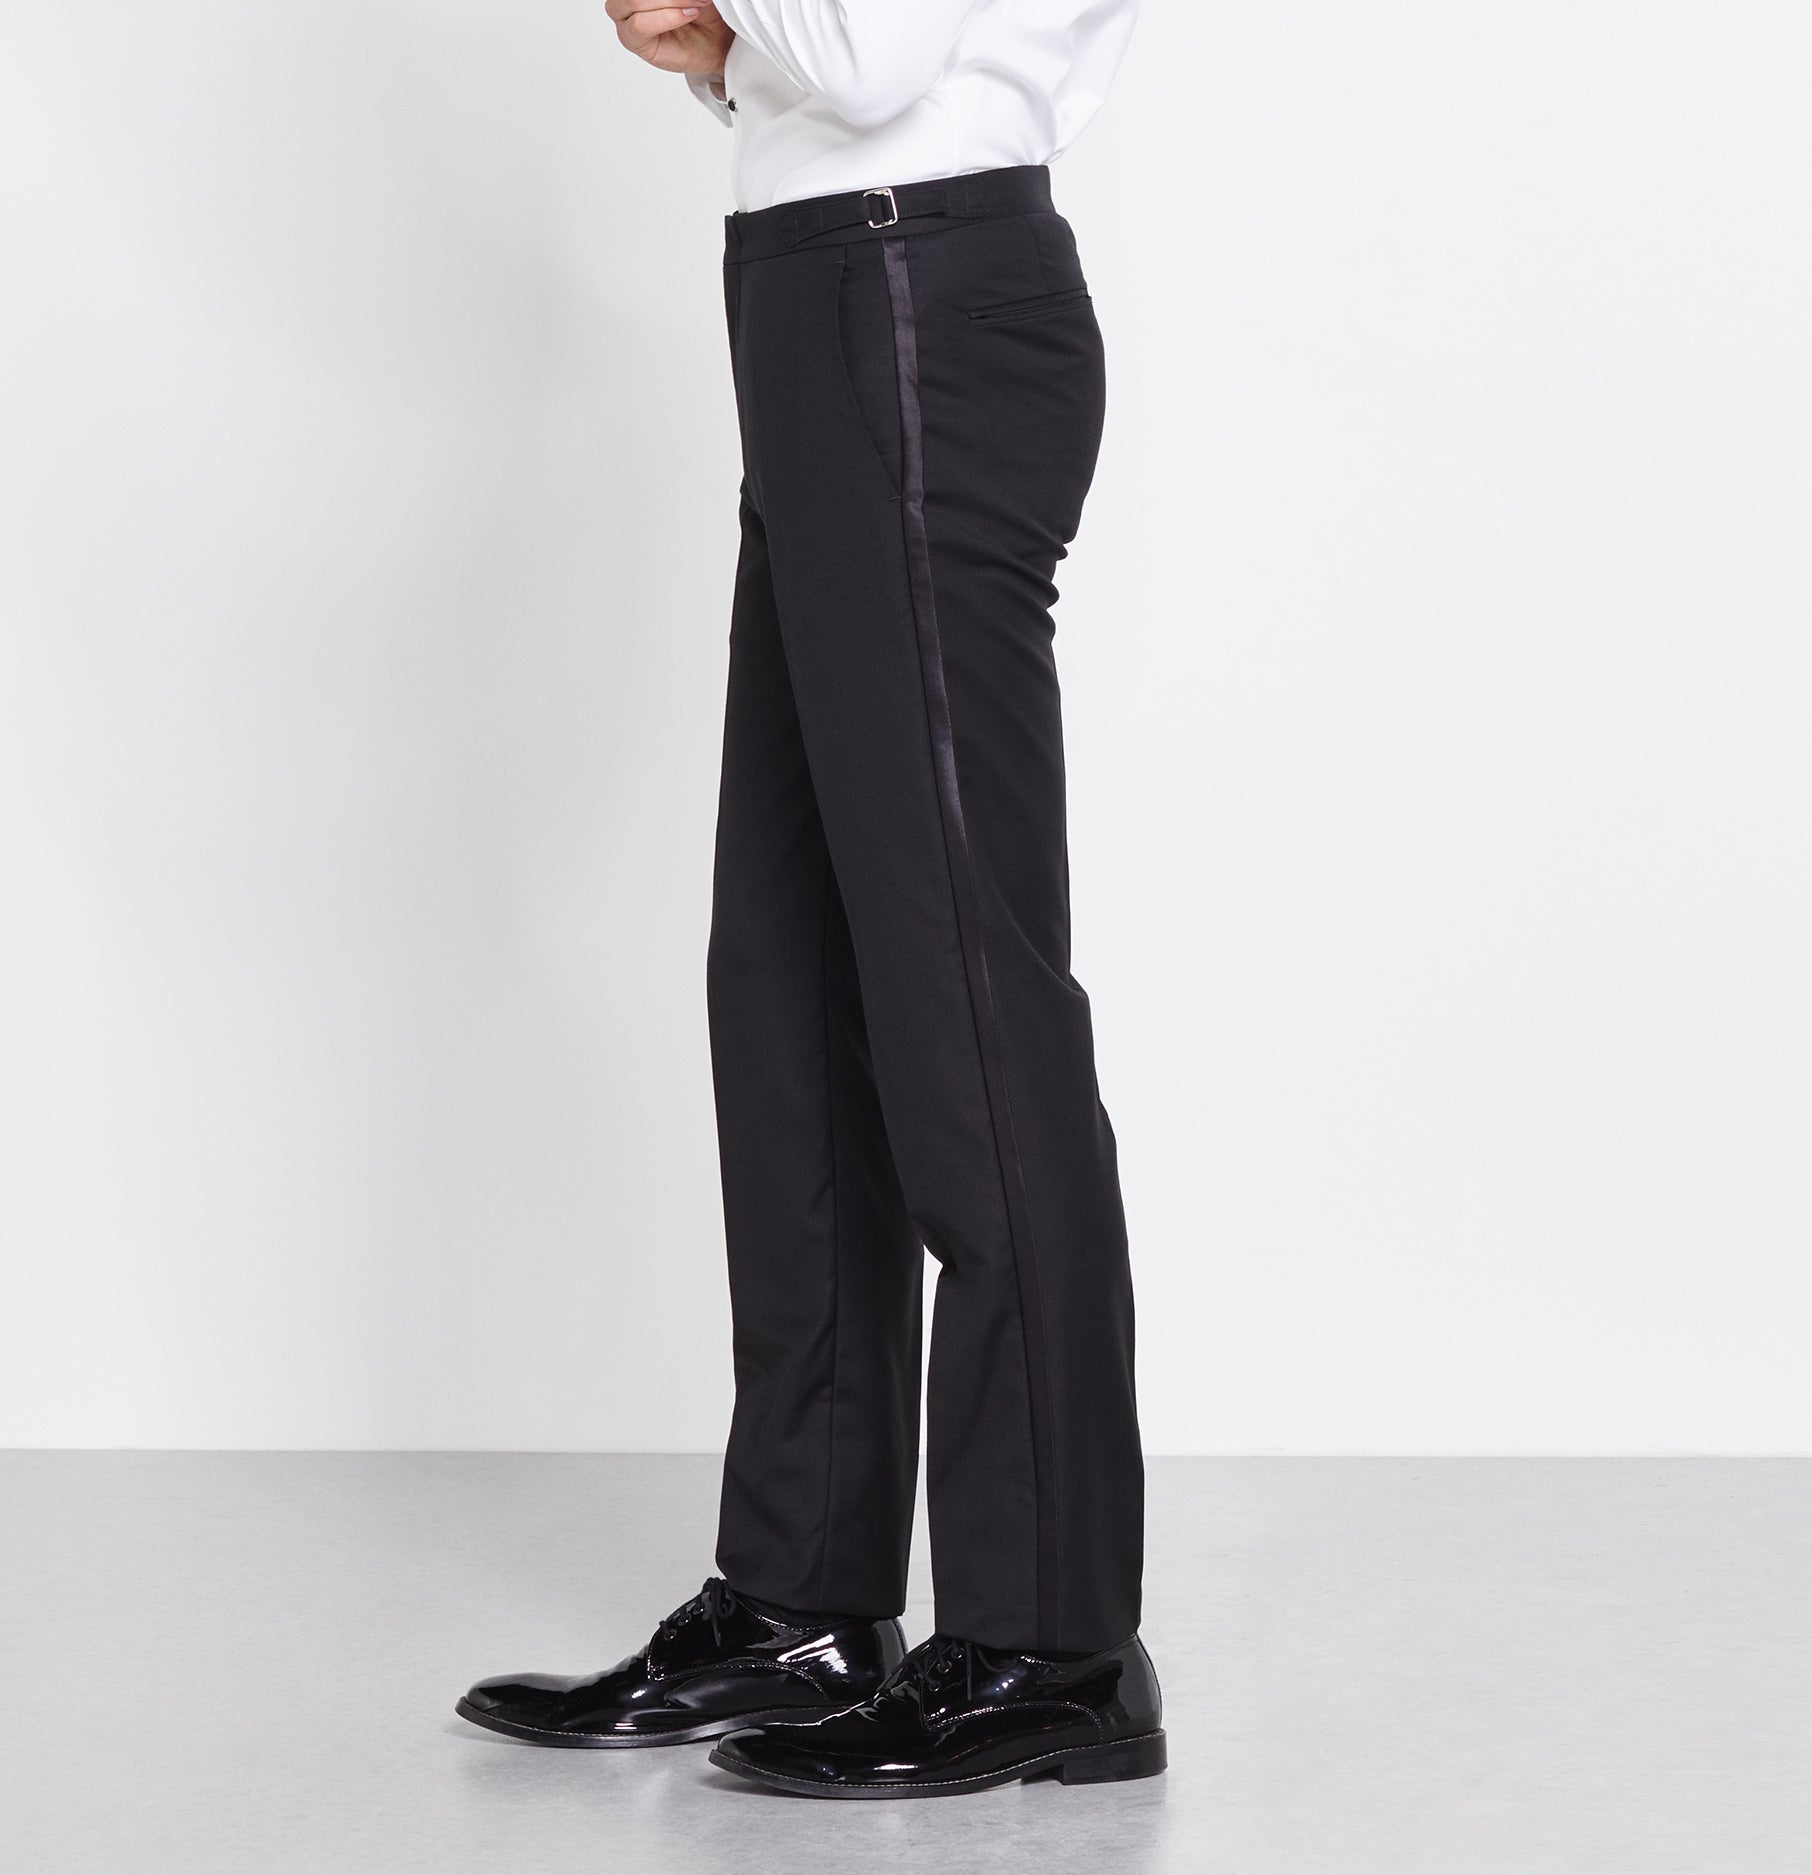 Men's Retro Vintage Black Tuxedo Pants Satin Stripe Tapered Leg 30-32